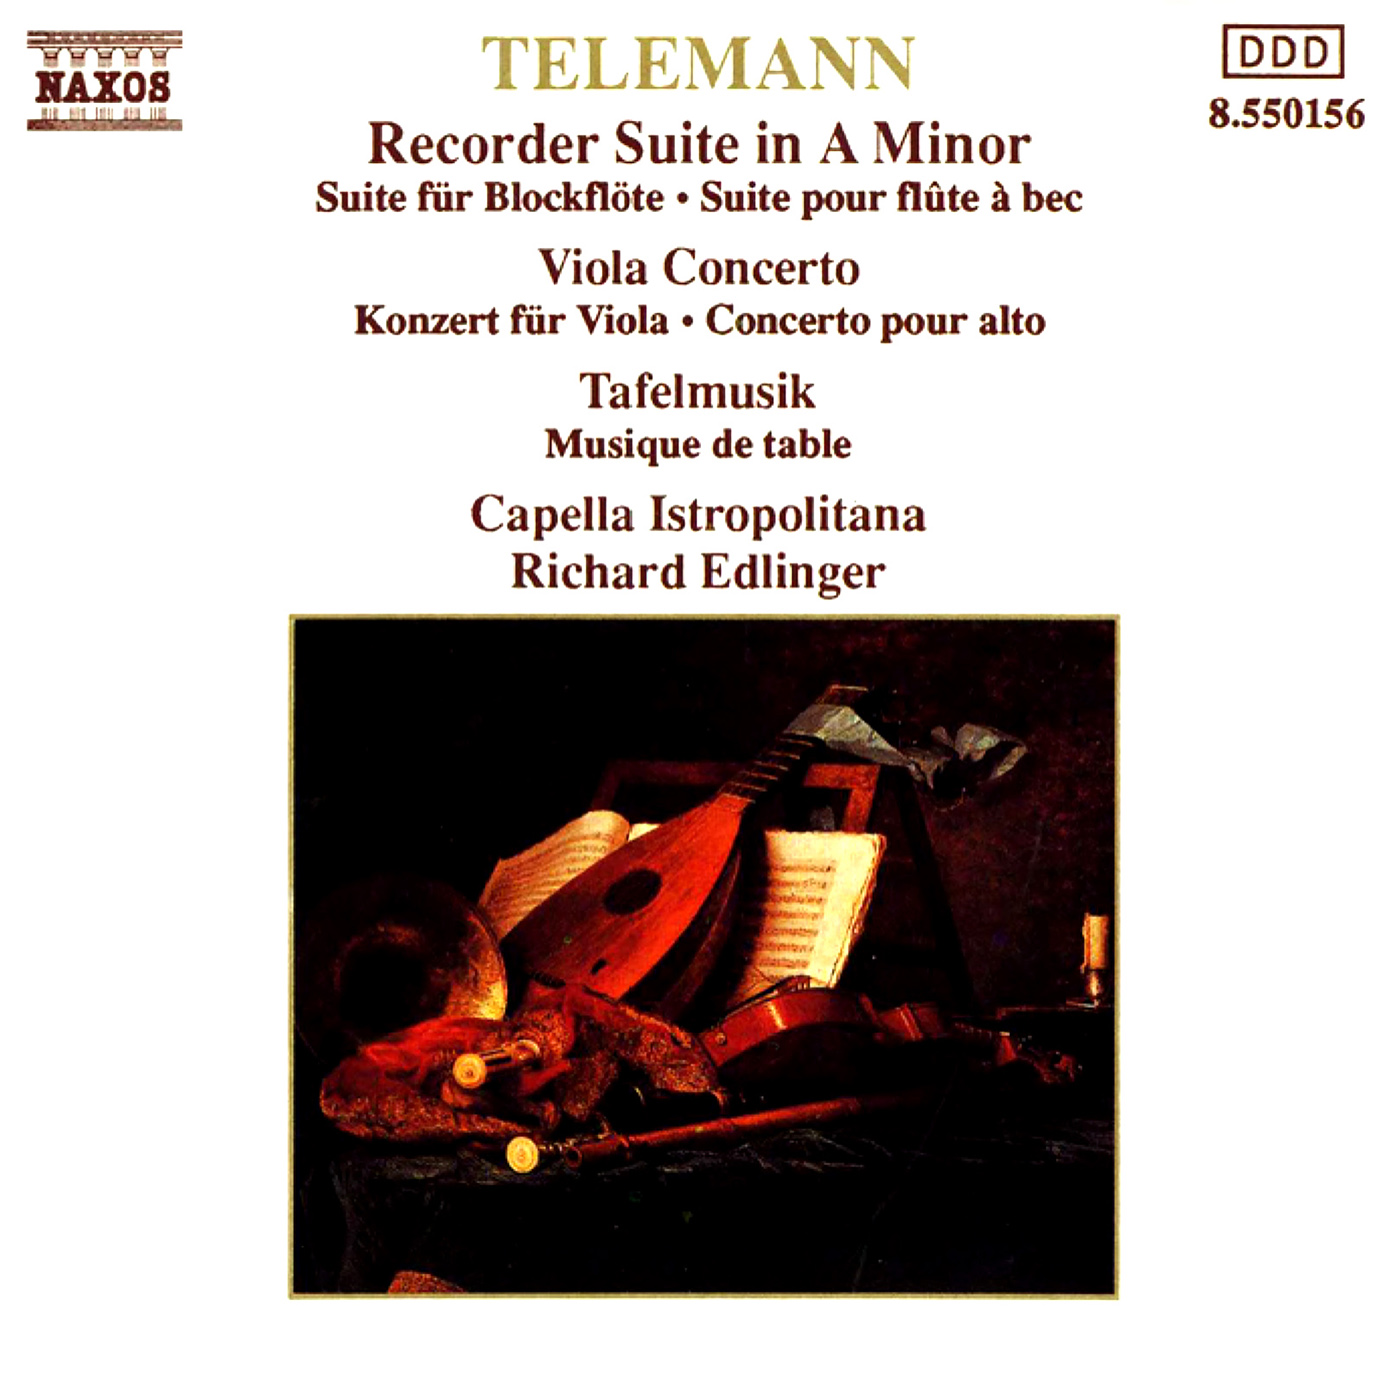 TELEMANN, G.P.: Recorder Suite in A Minor / Viola Concerto / Tafelmusik: 2 Concertos (Capella Istropolitana, Edlinger)